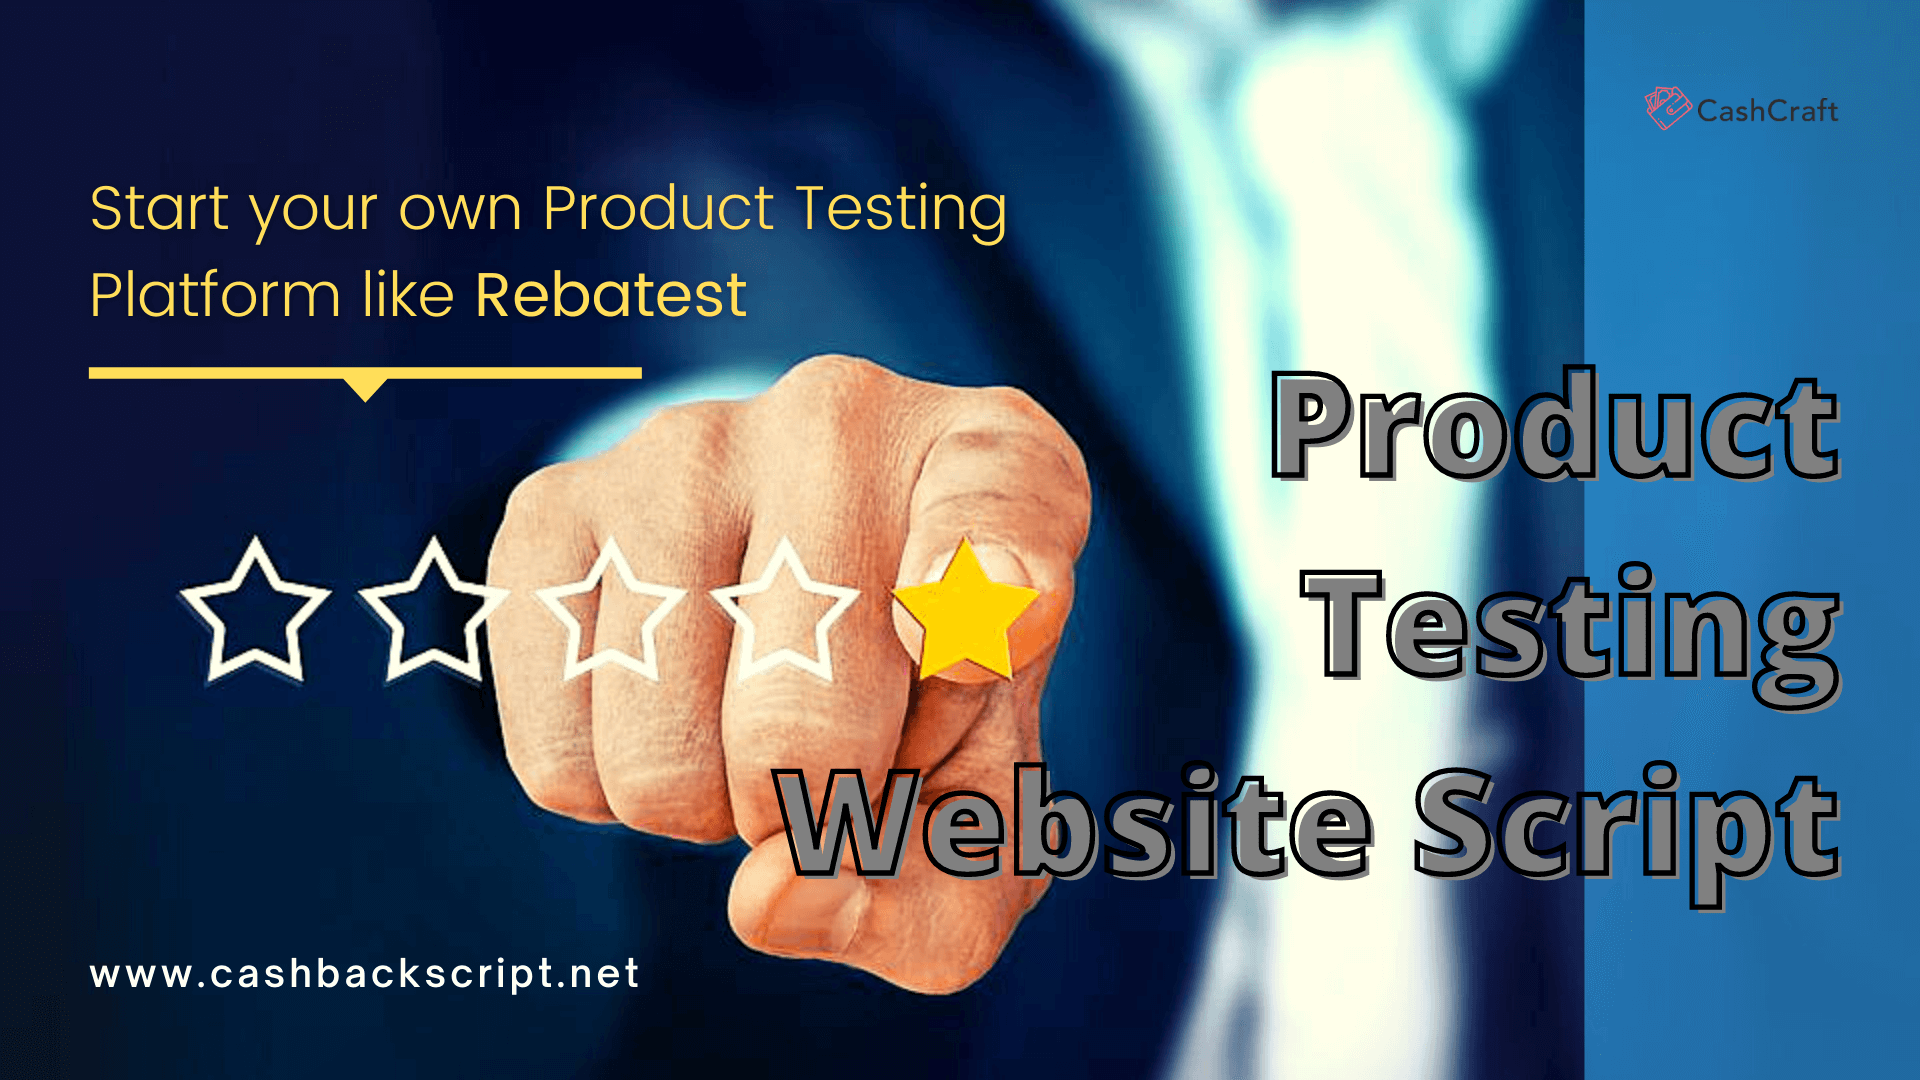 Start your own Product Testing Platform like Rebatest